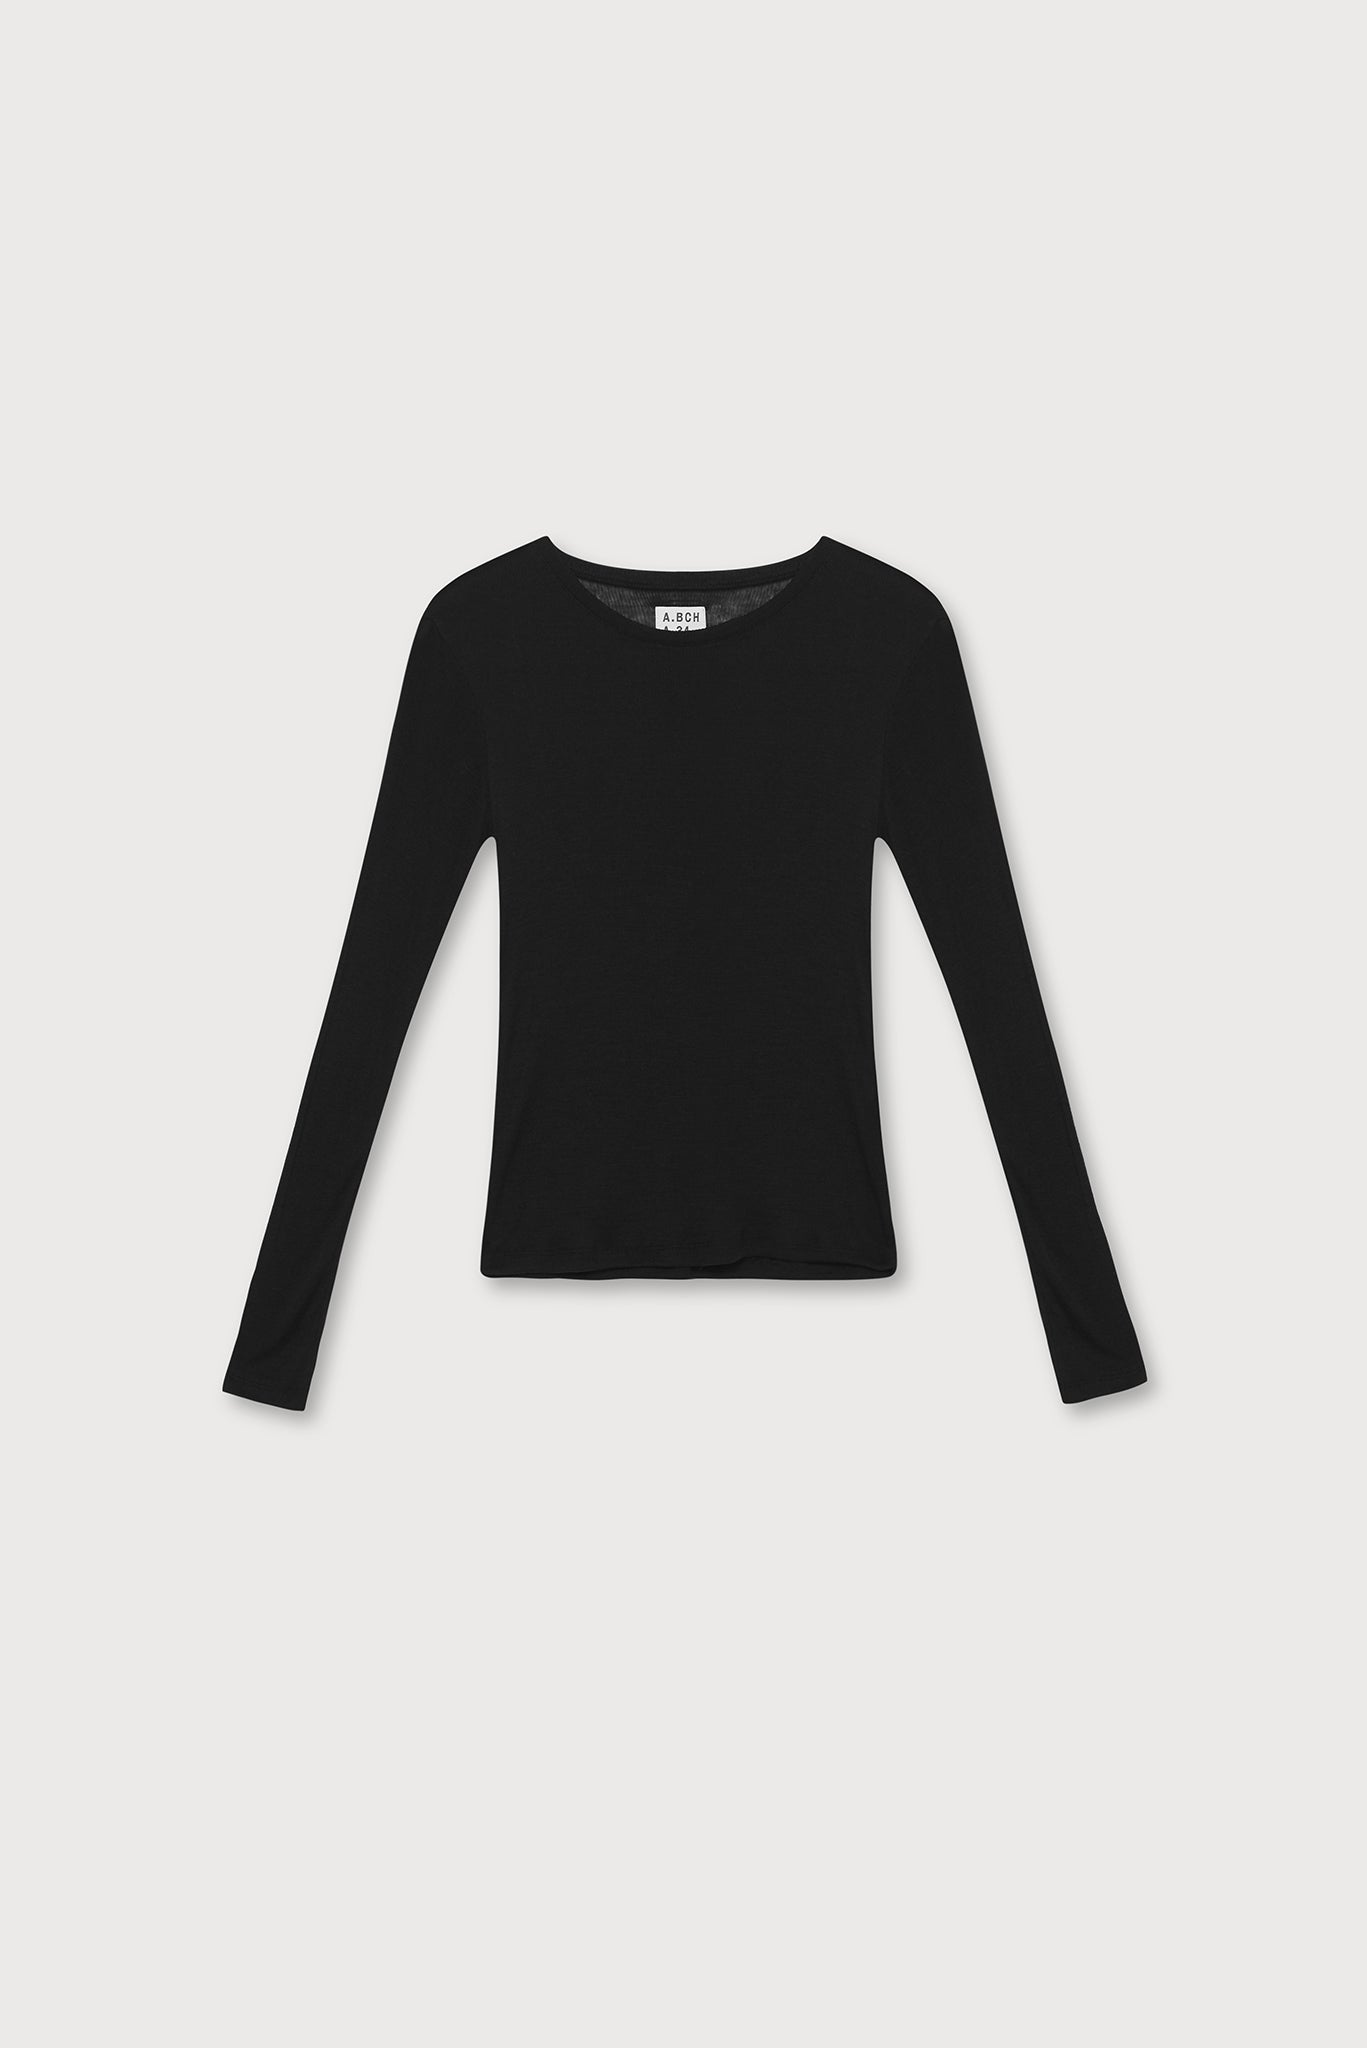 A.BCH A.34 Black Long Sleeve Thermal T-Shirt in Australian Merino